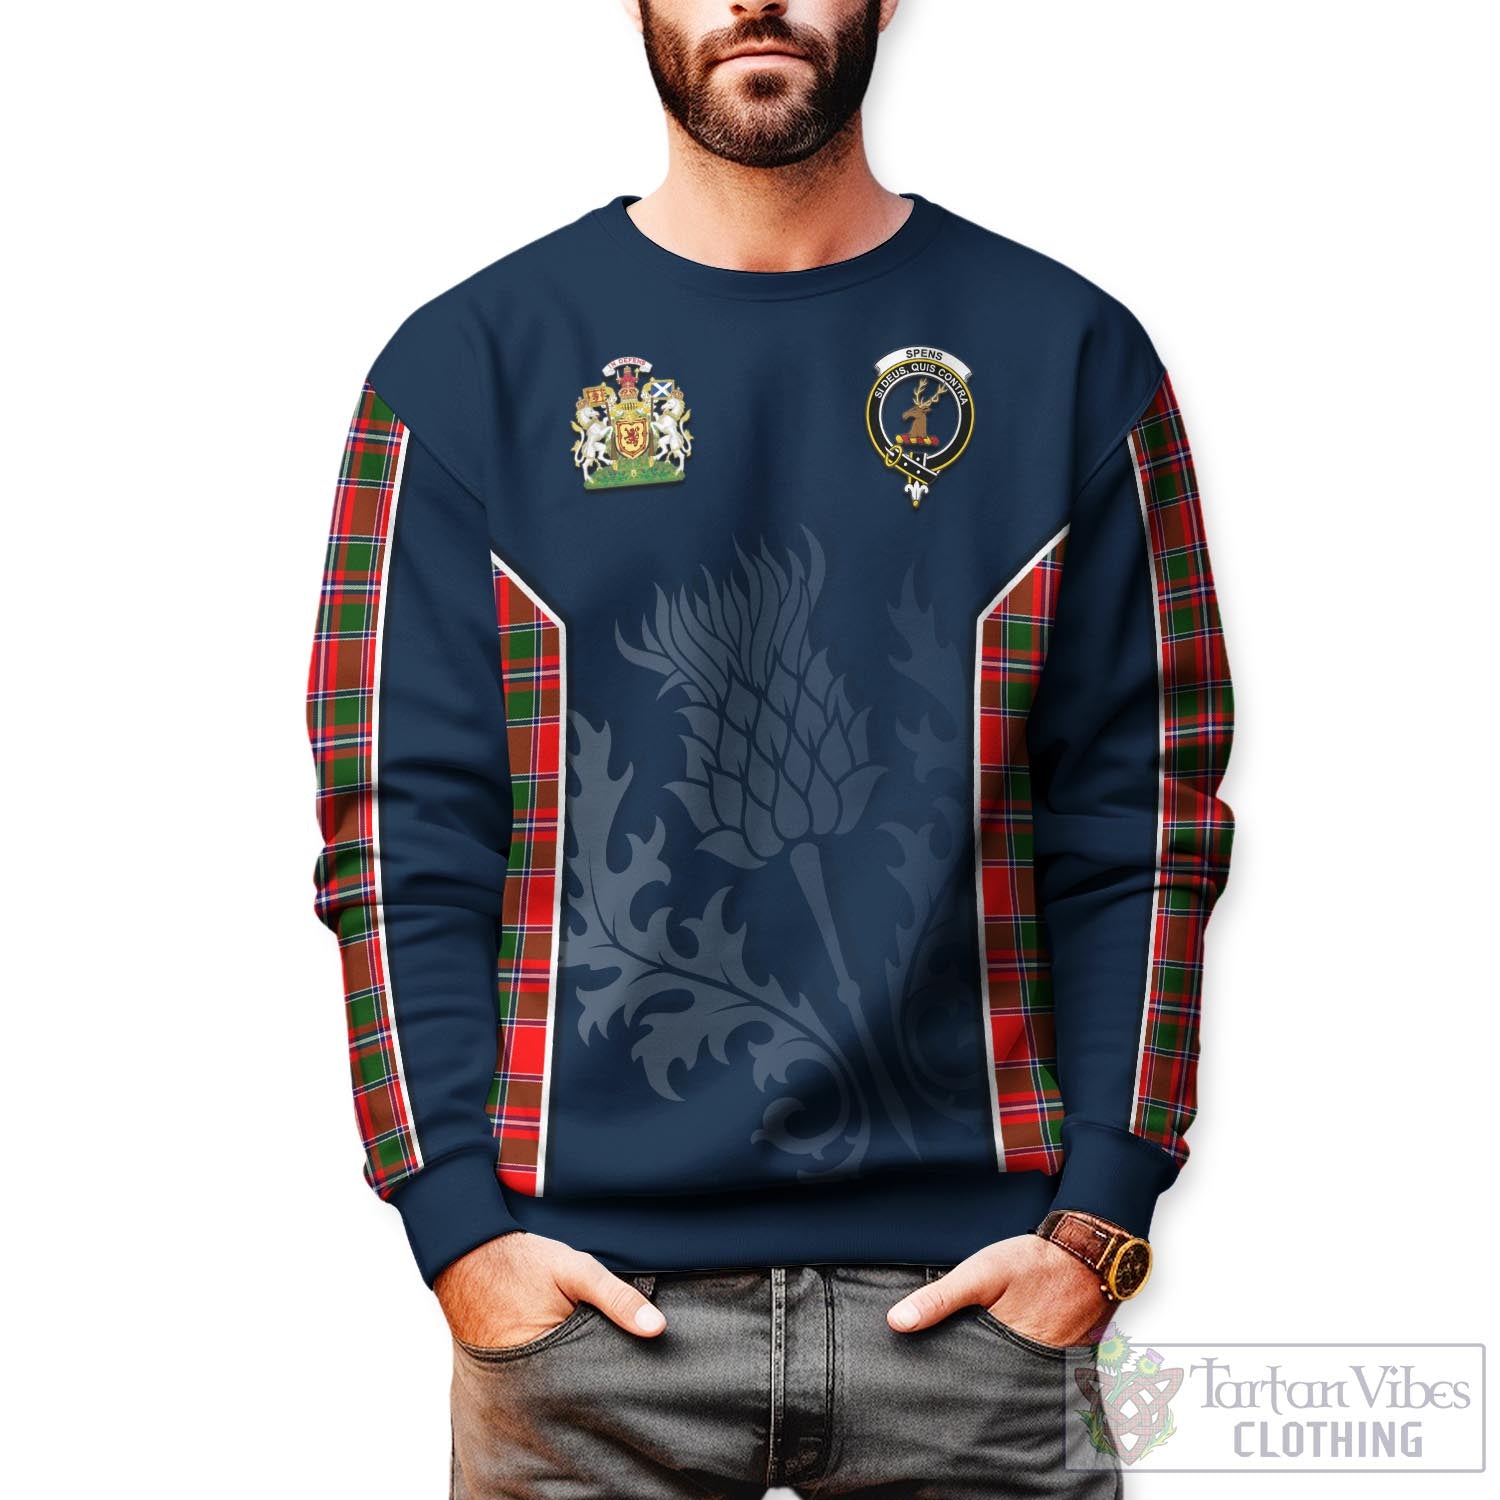 Tartan Vibes Clothing Spens Modern Tartan Sweatshirt with Family Crest and Scottish Thistle Vibes Sport Style